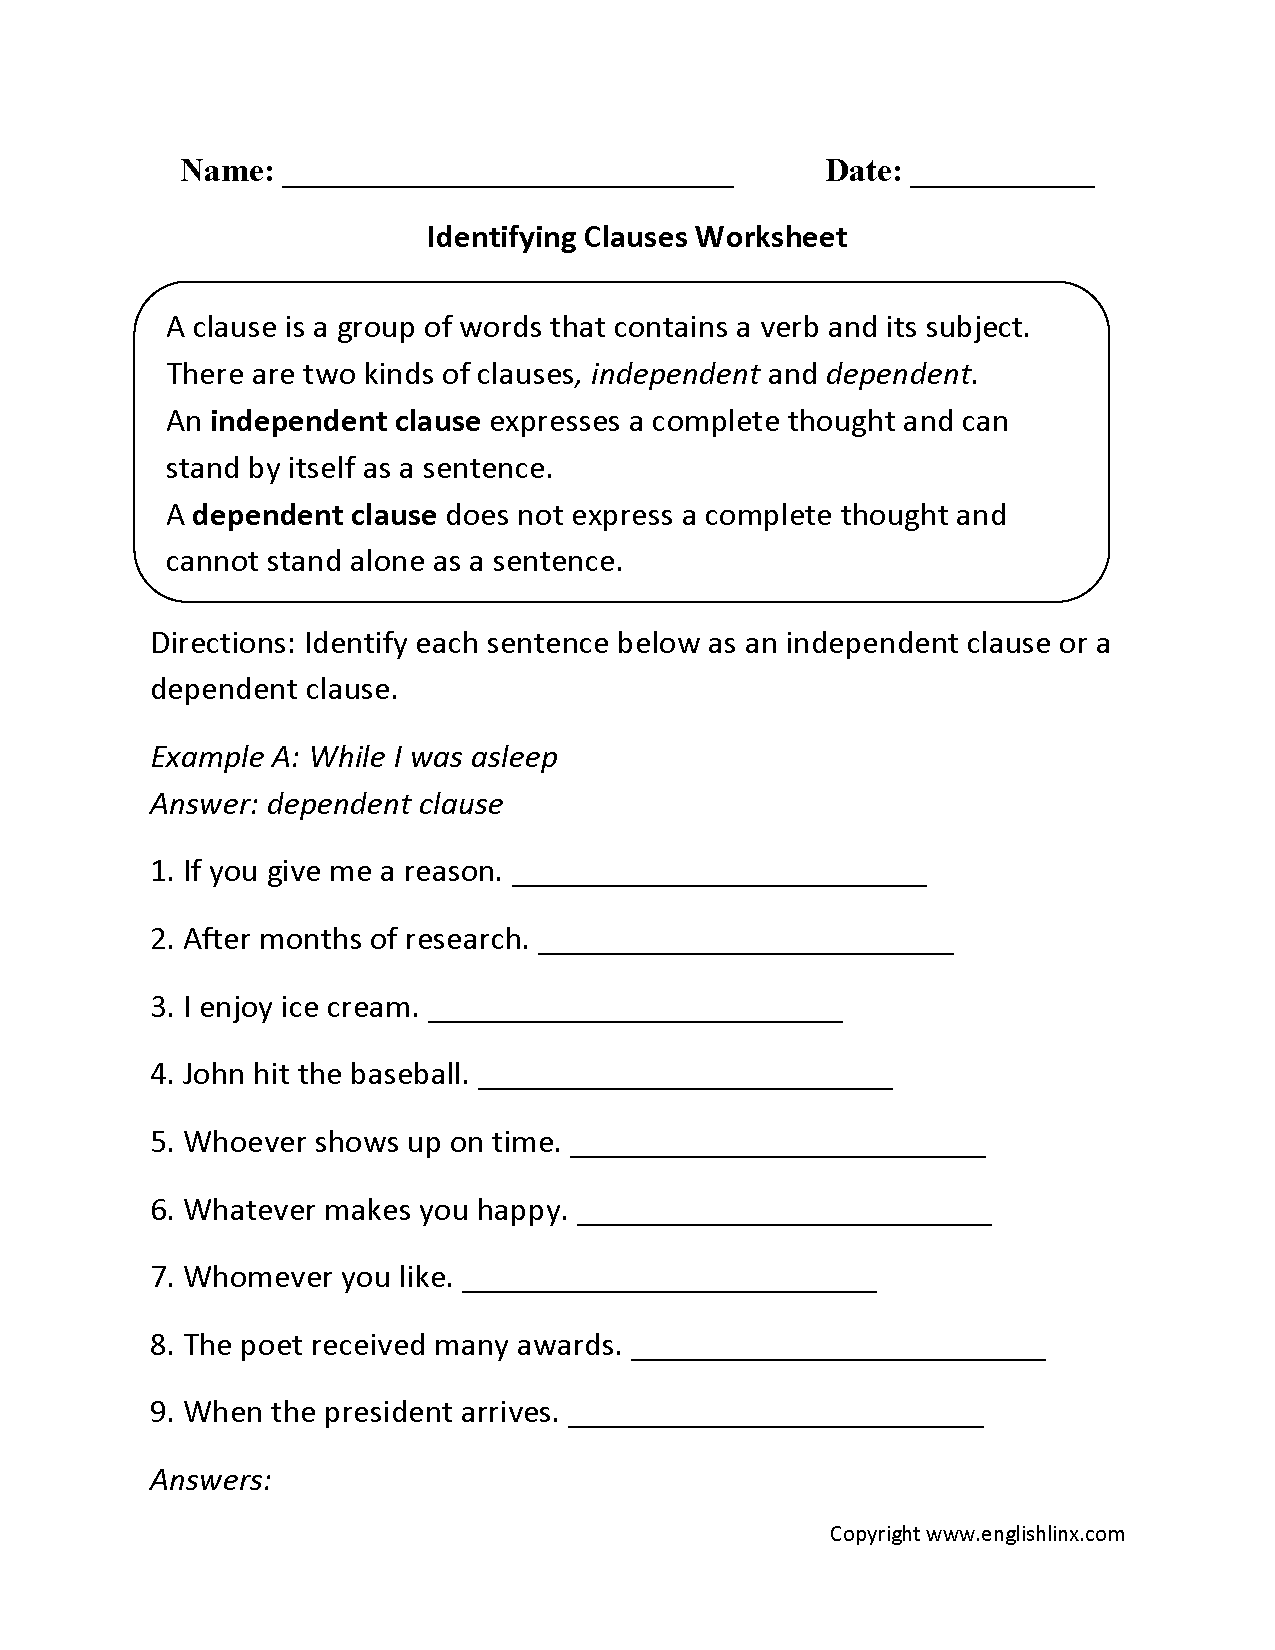 Identifying Clauses Worksheet